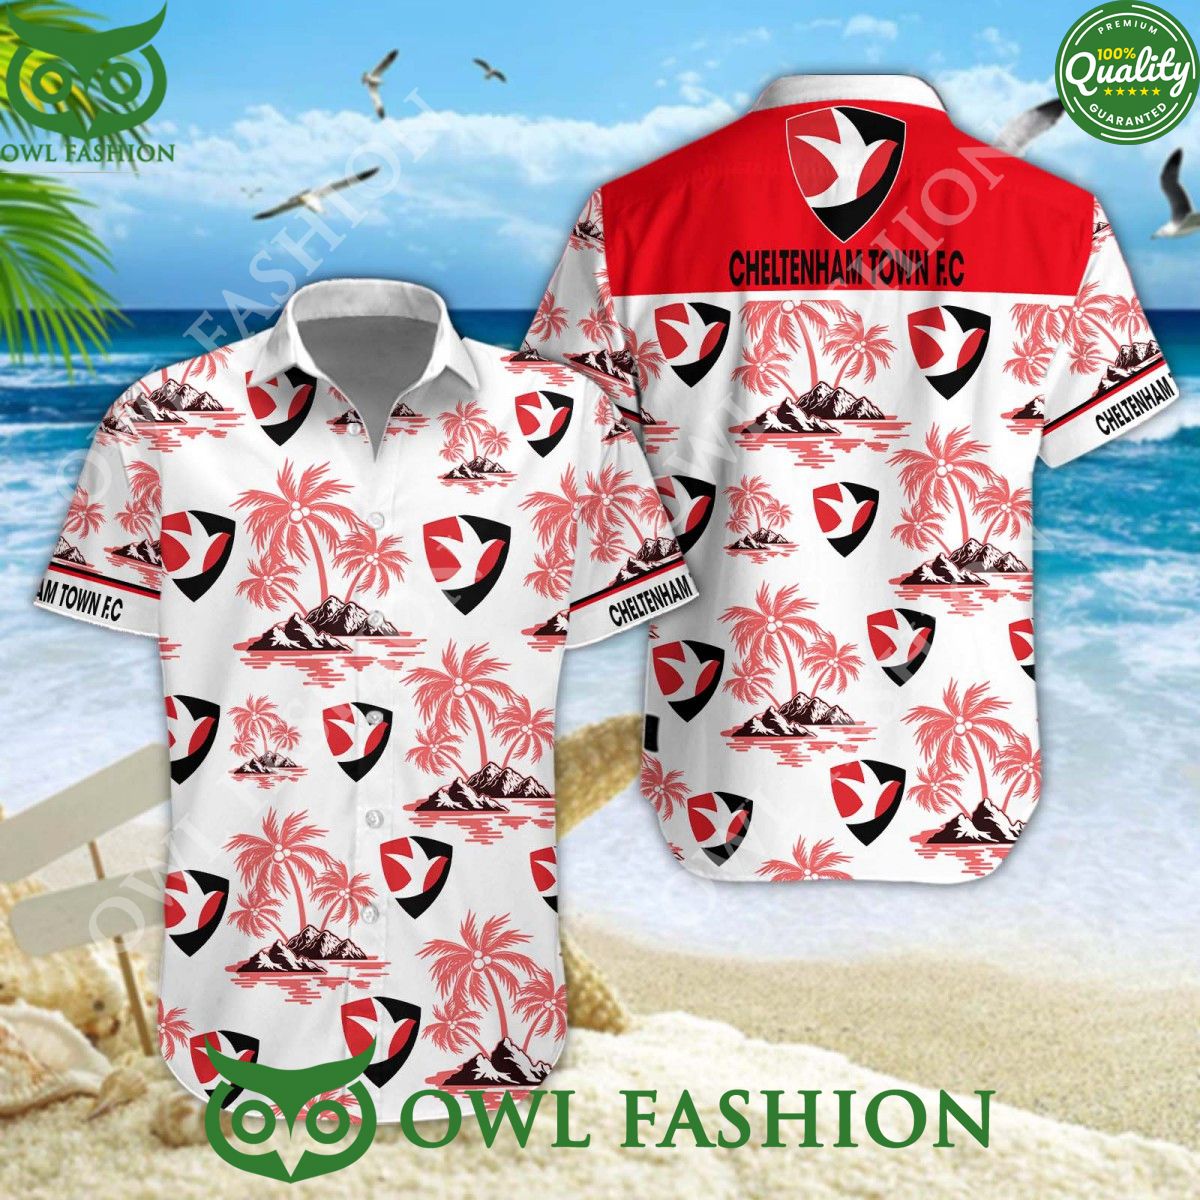 cheltenham town football club summer hawaiian shirt 1 8frUV.jpg